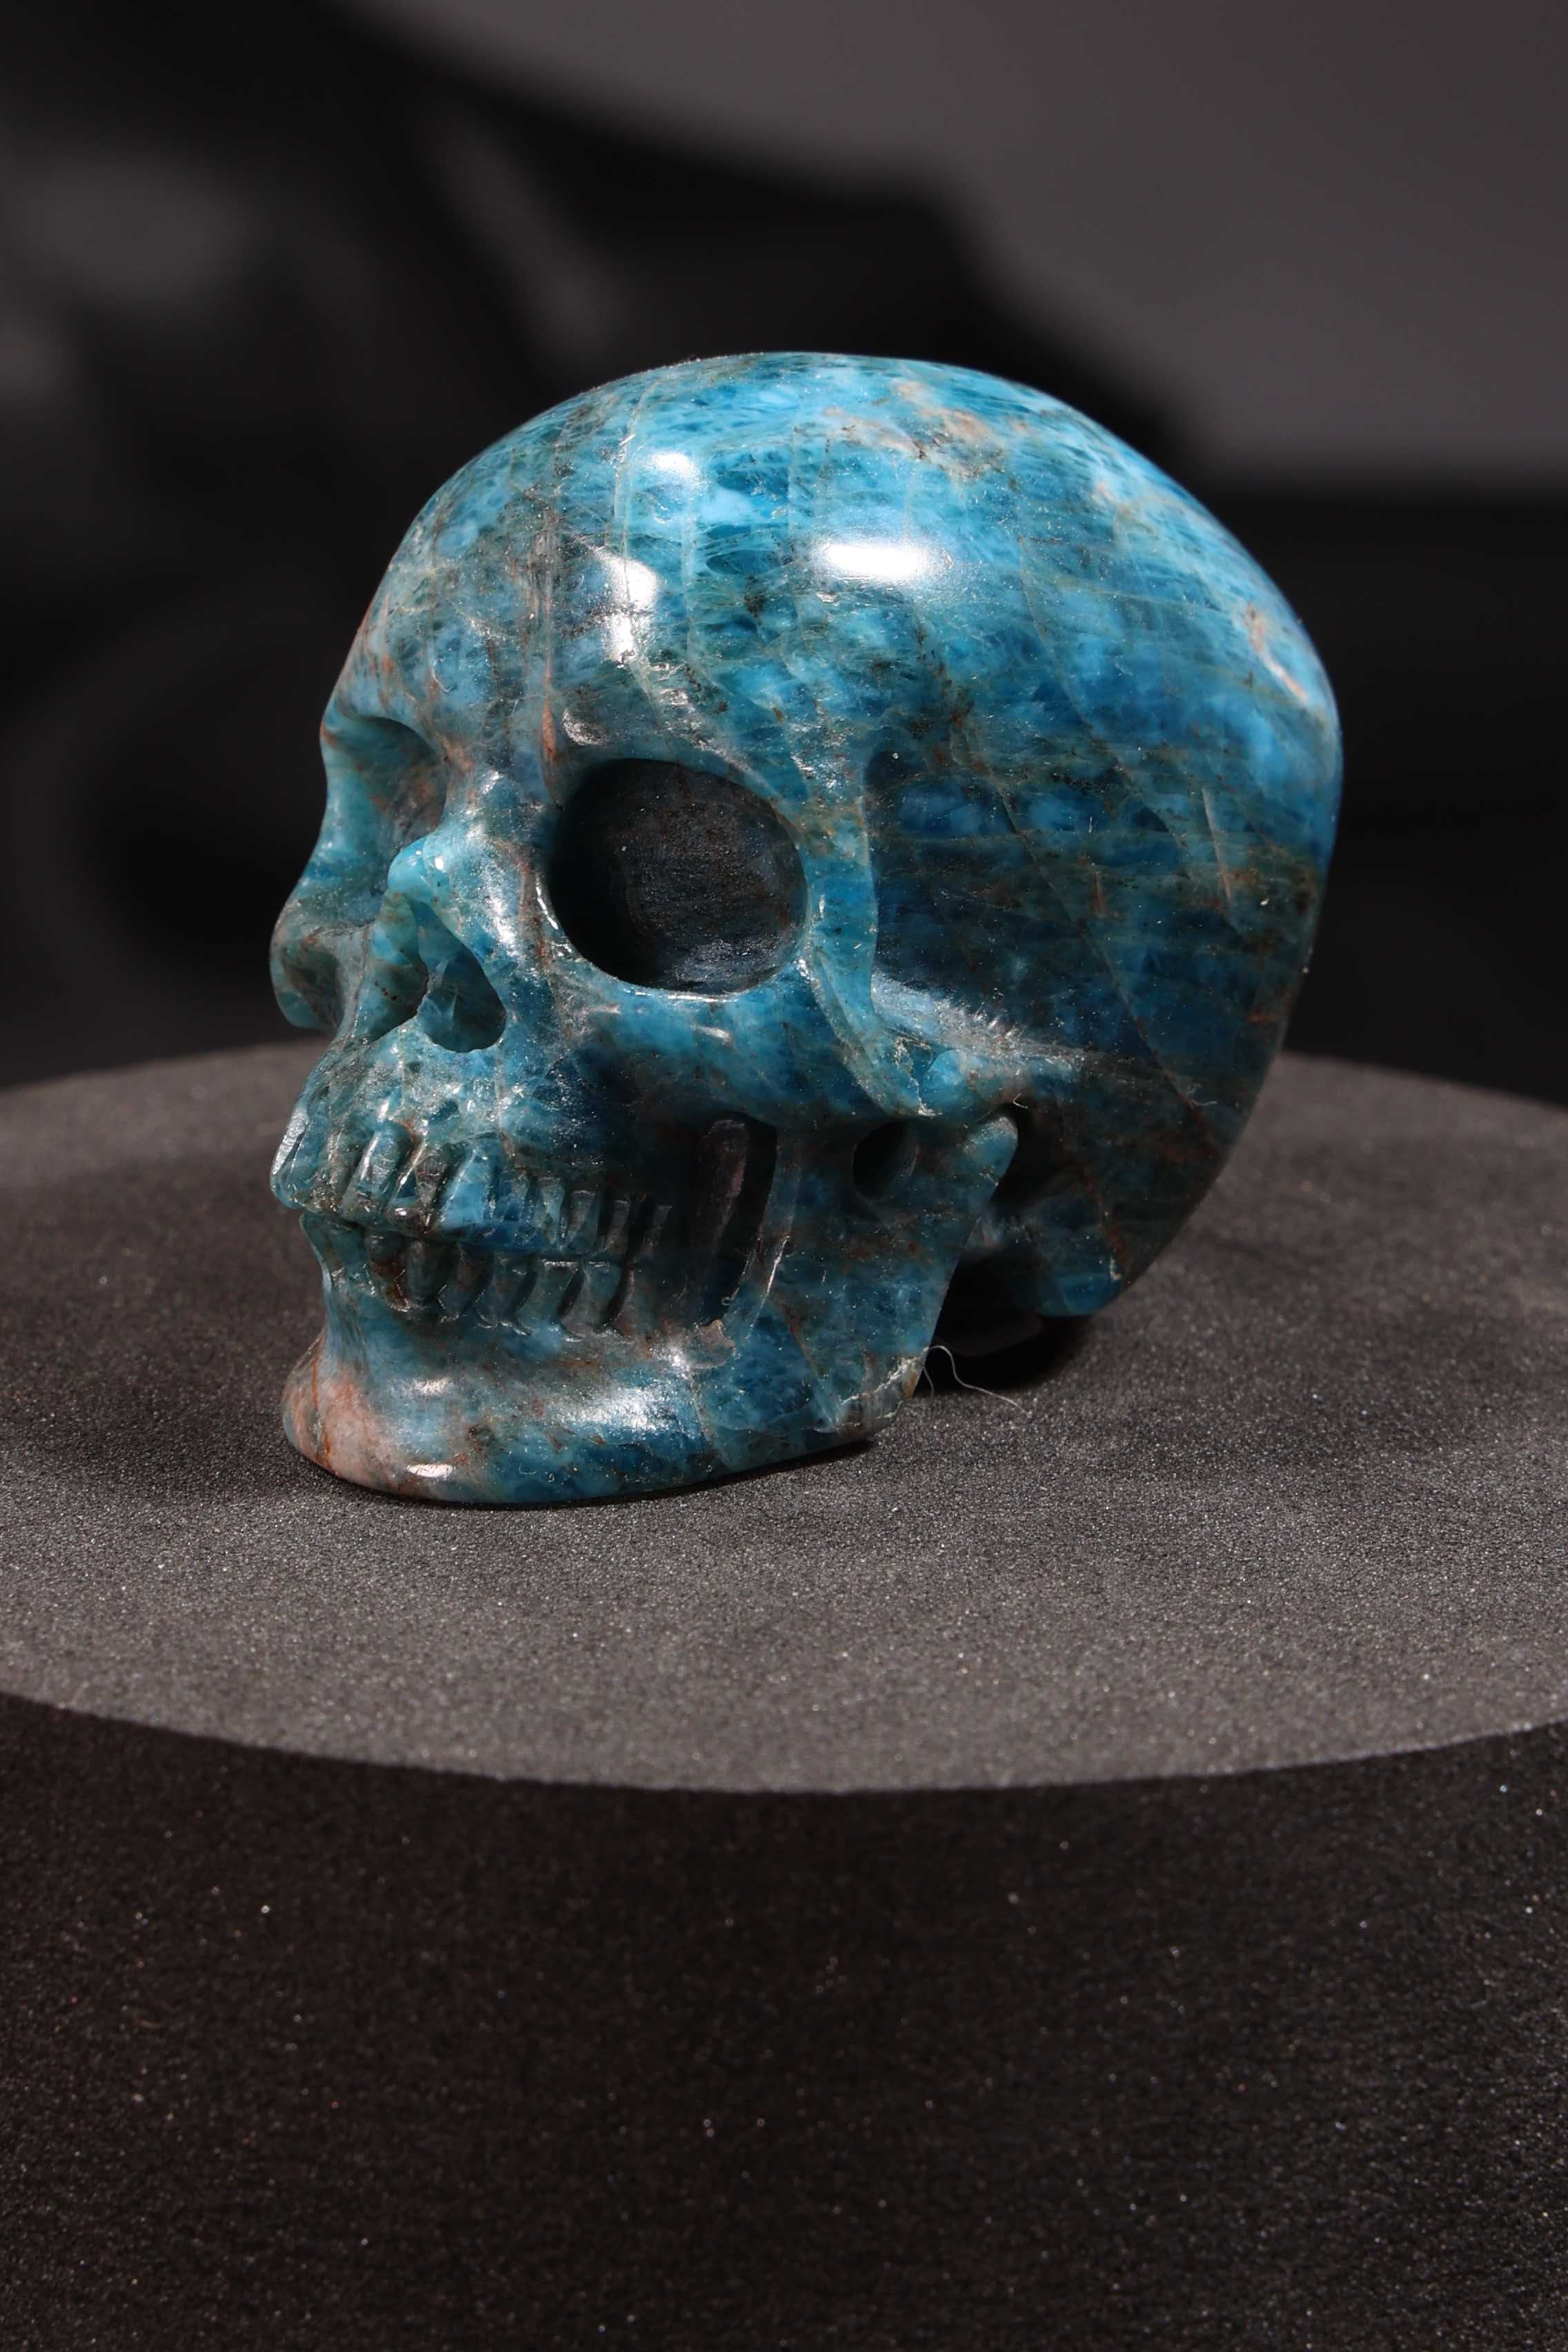 Blue Apatite Skull Carving